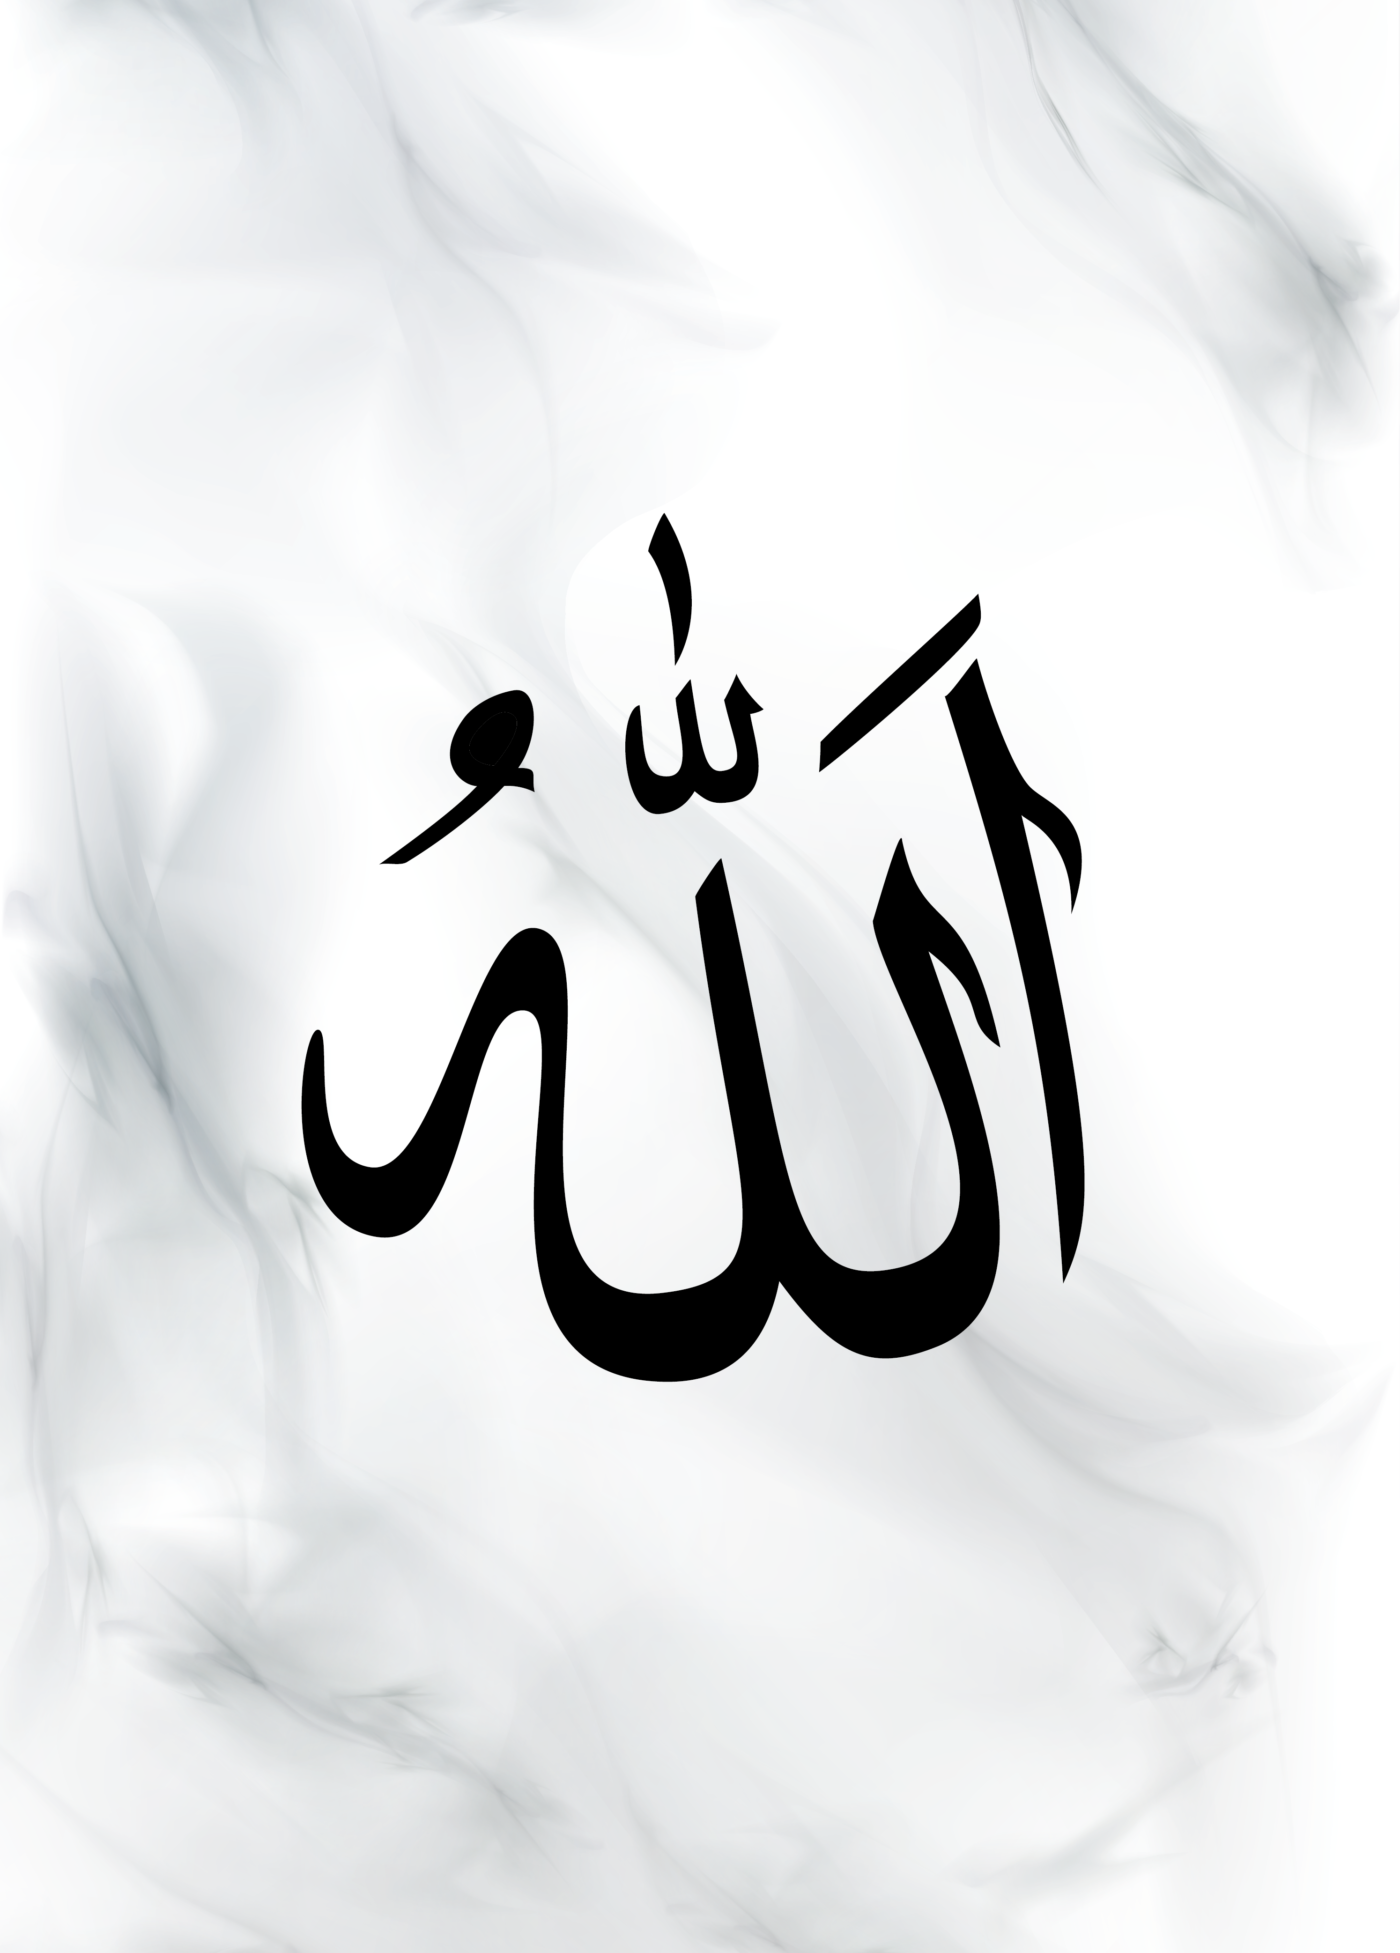 Allah Dua Muhammed Zeichenfläche 1 tutkum.de